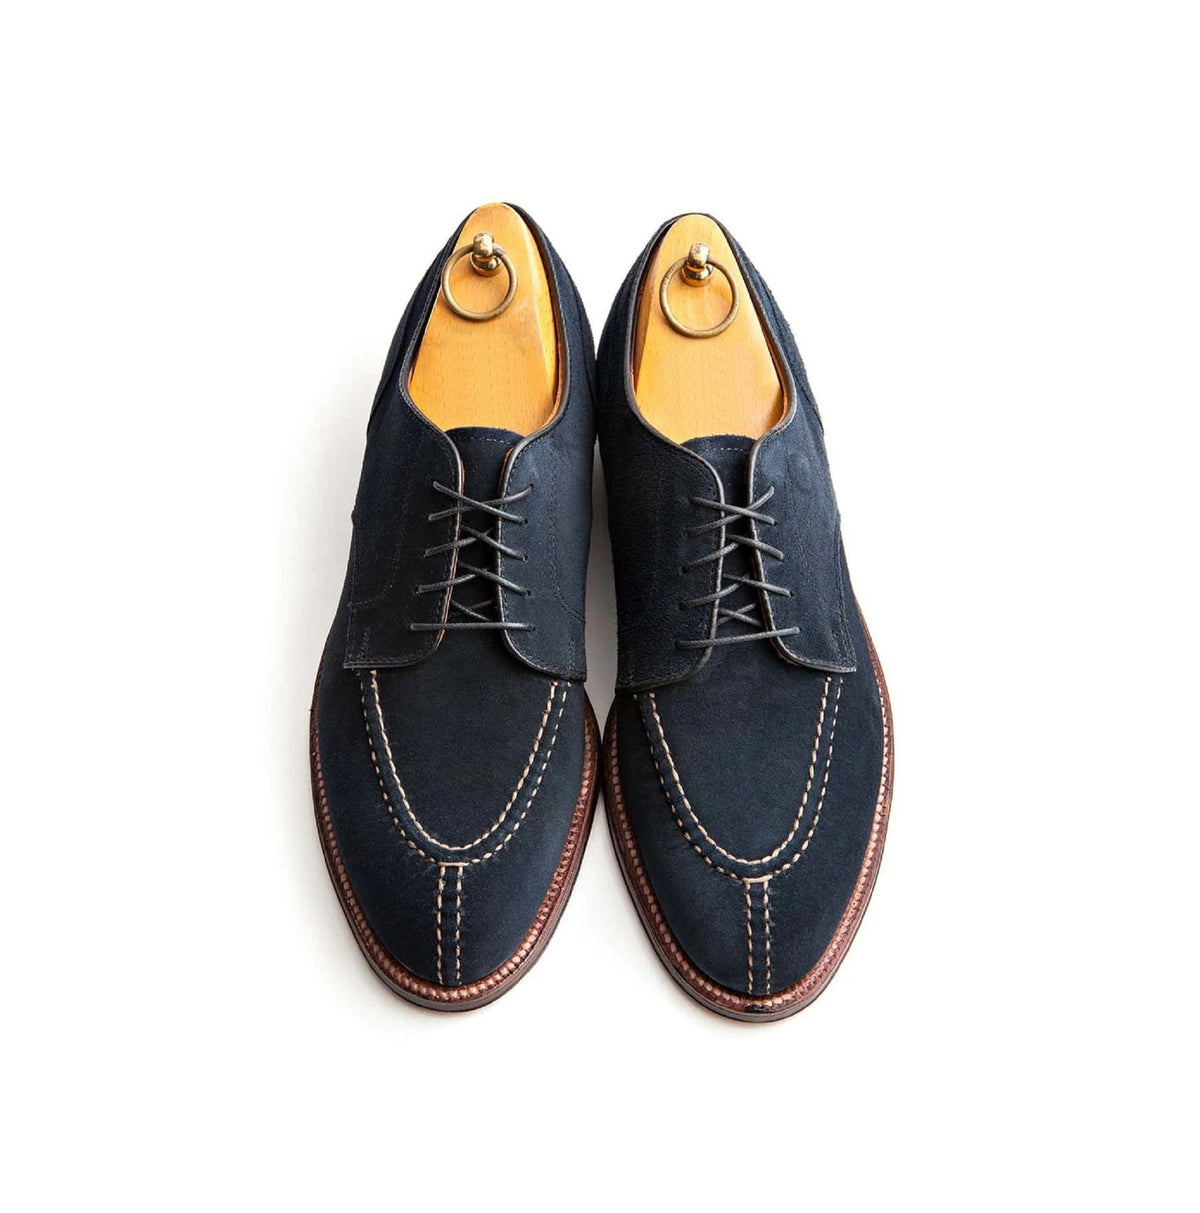 Handmade Bespoke Men's Navy Blue Color Genuine Suede Leather Split Toe Lace Up Oxford Shoes